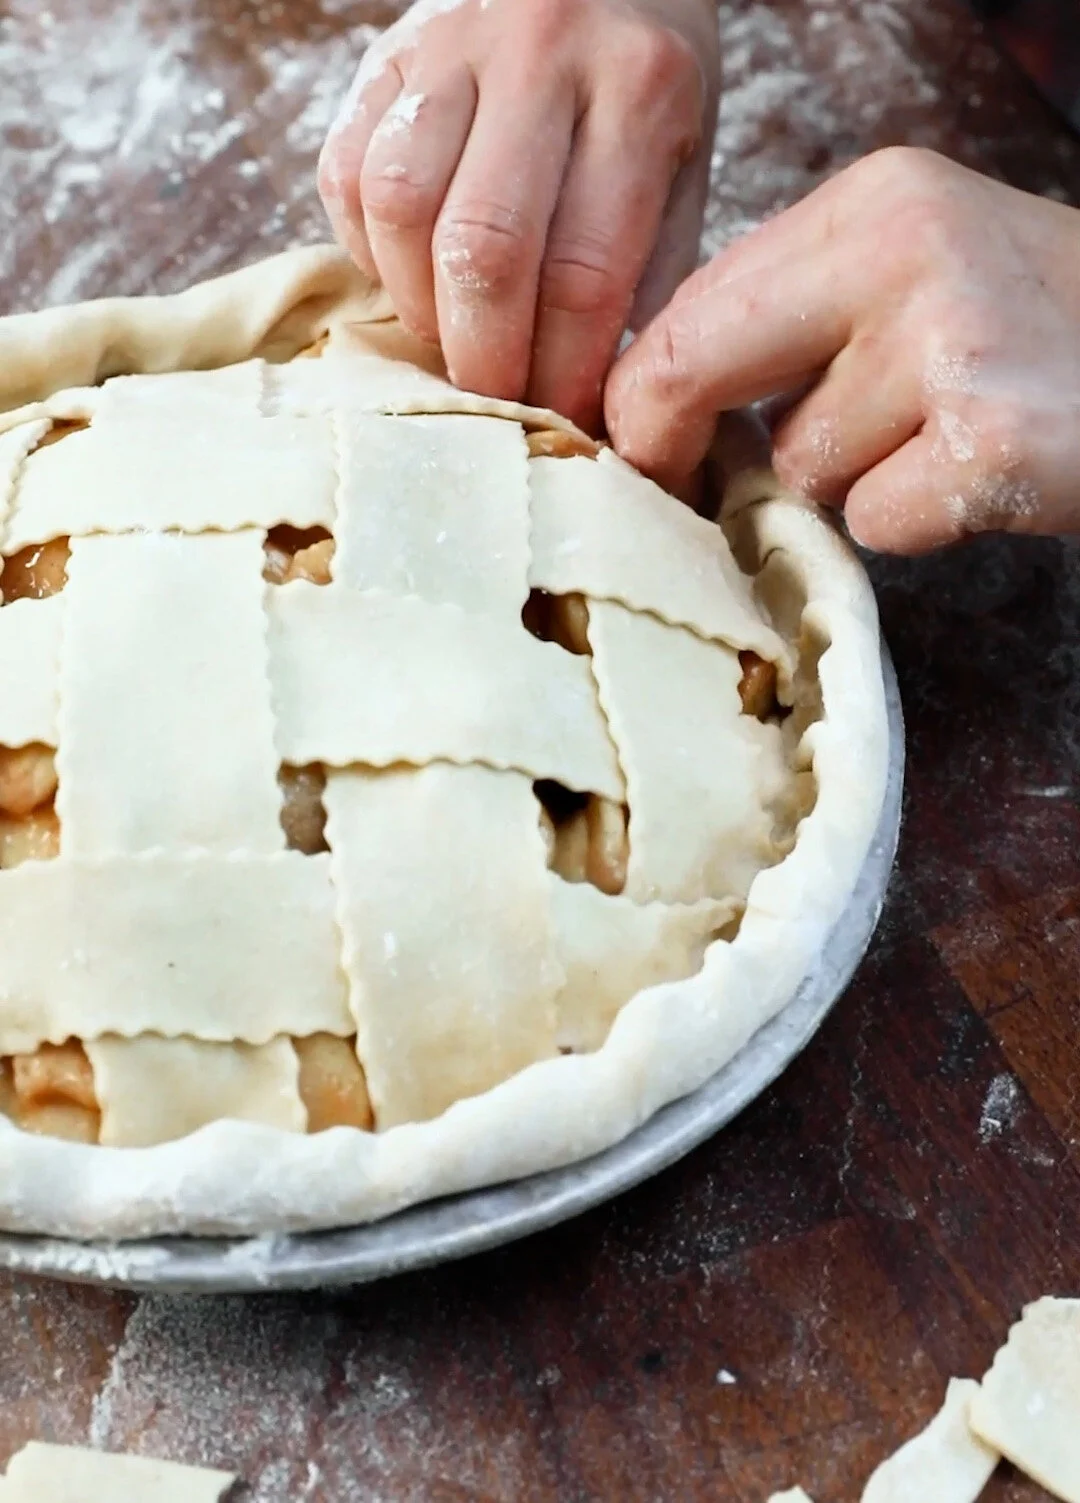 Making Lattice Top for Pies